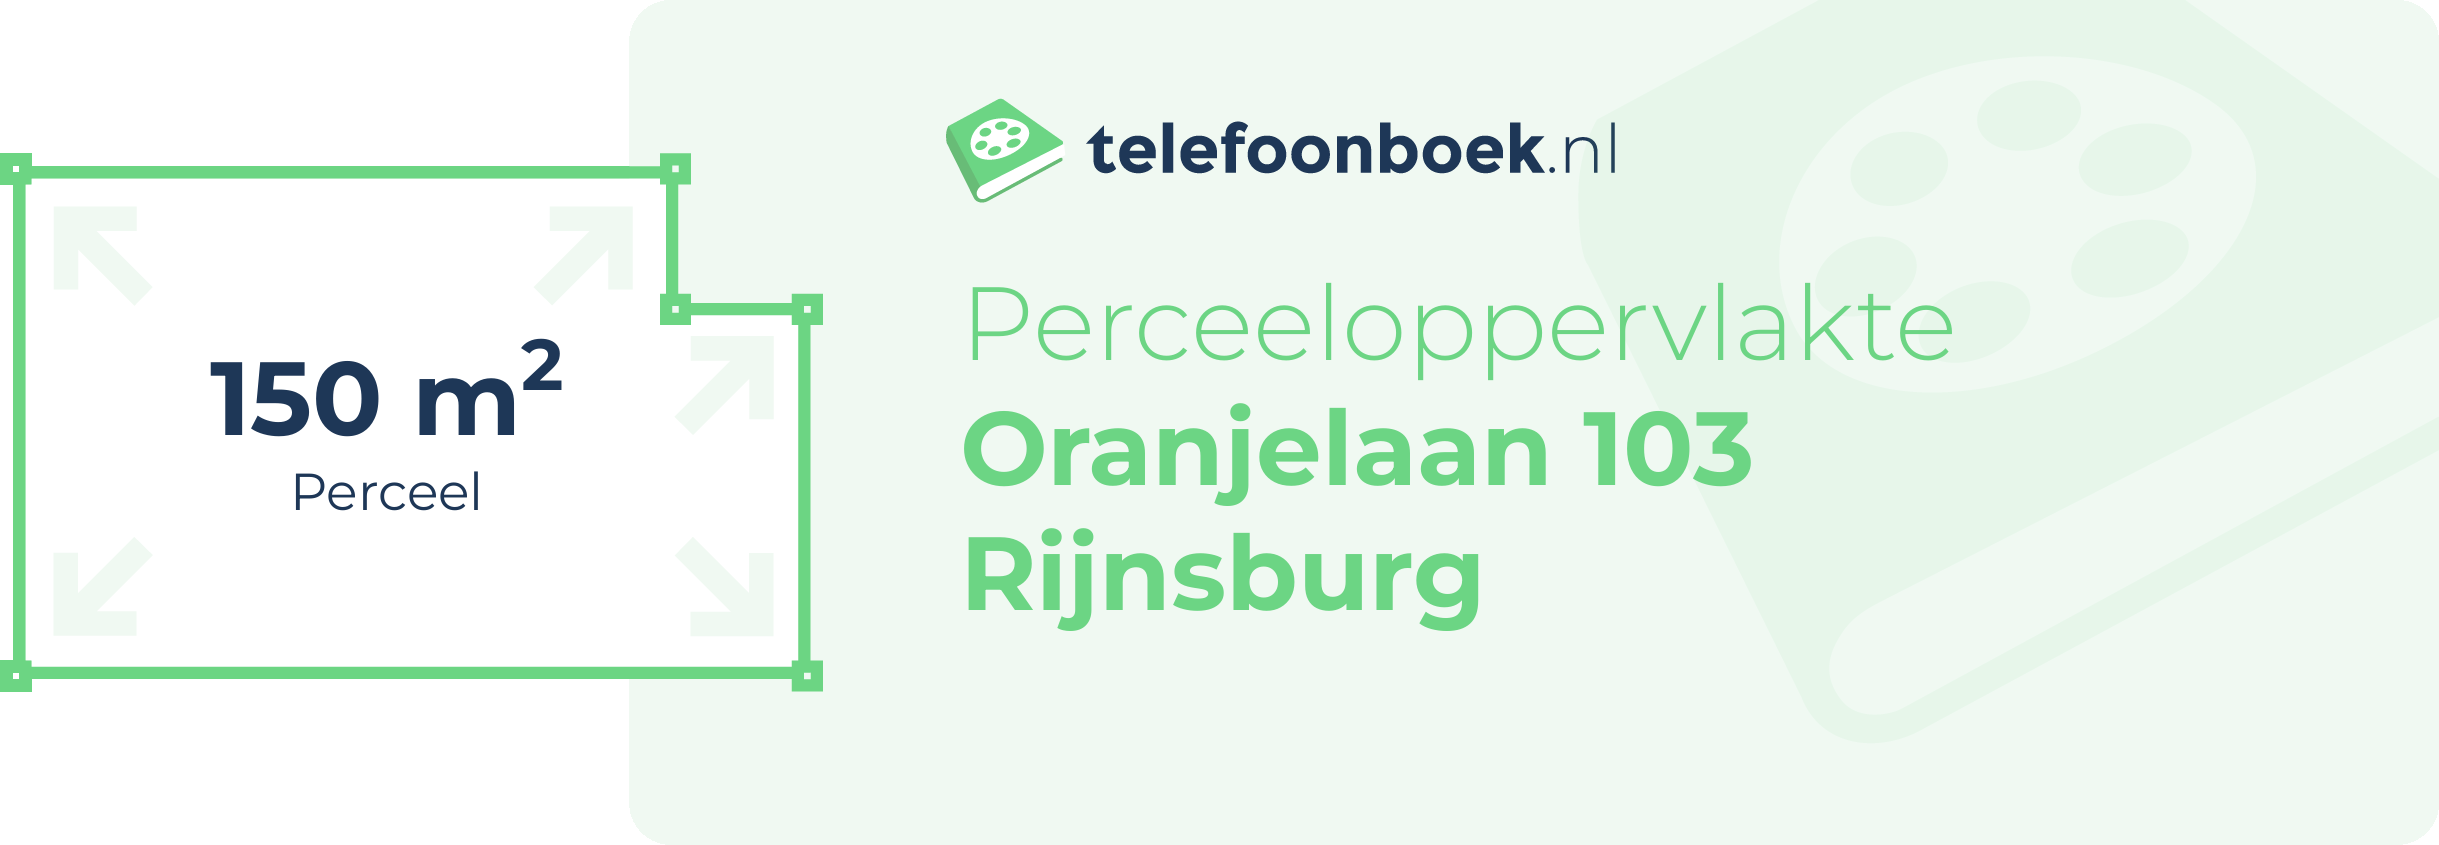 Perceeloppervlakte Oranjelaan 103 Rijnsburg